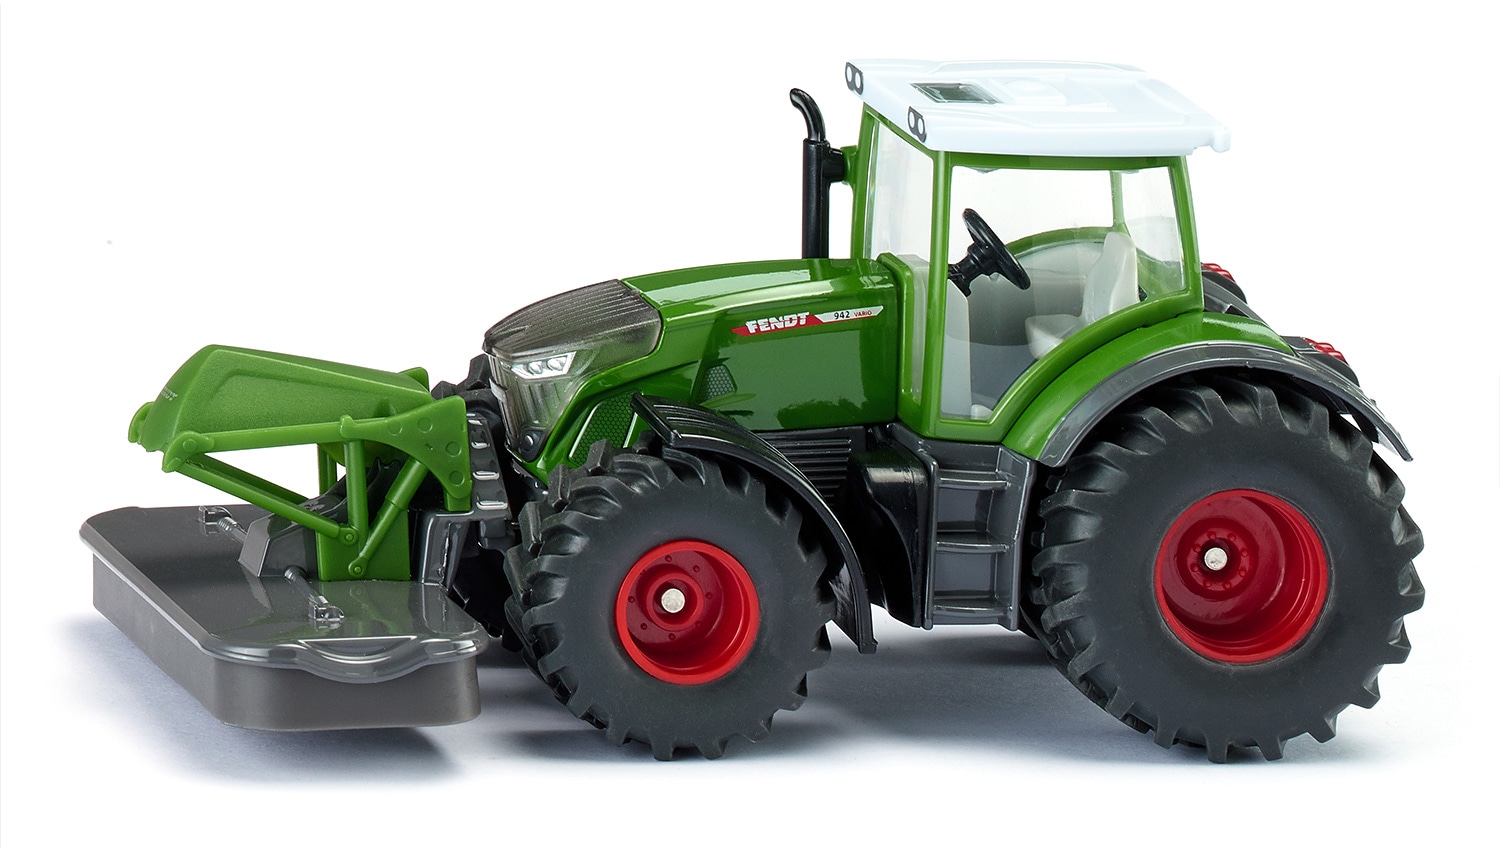 Siku Spielzeug-Traktor »SIKU Farmer, Fendt 942 Vario mit Frontmähwerk (2000)«